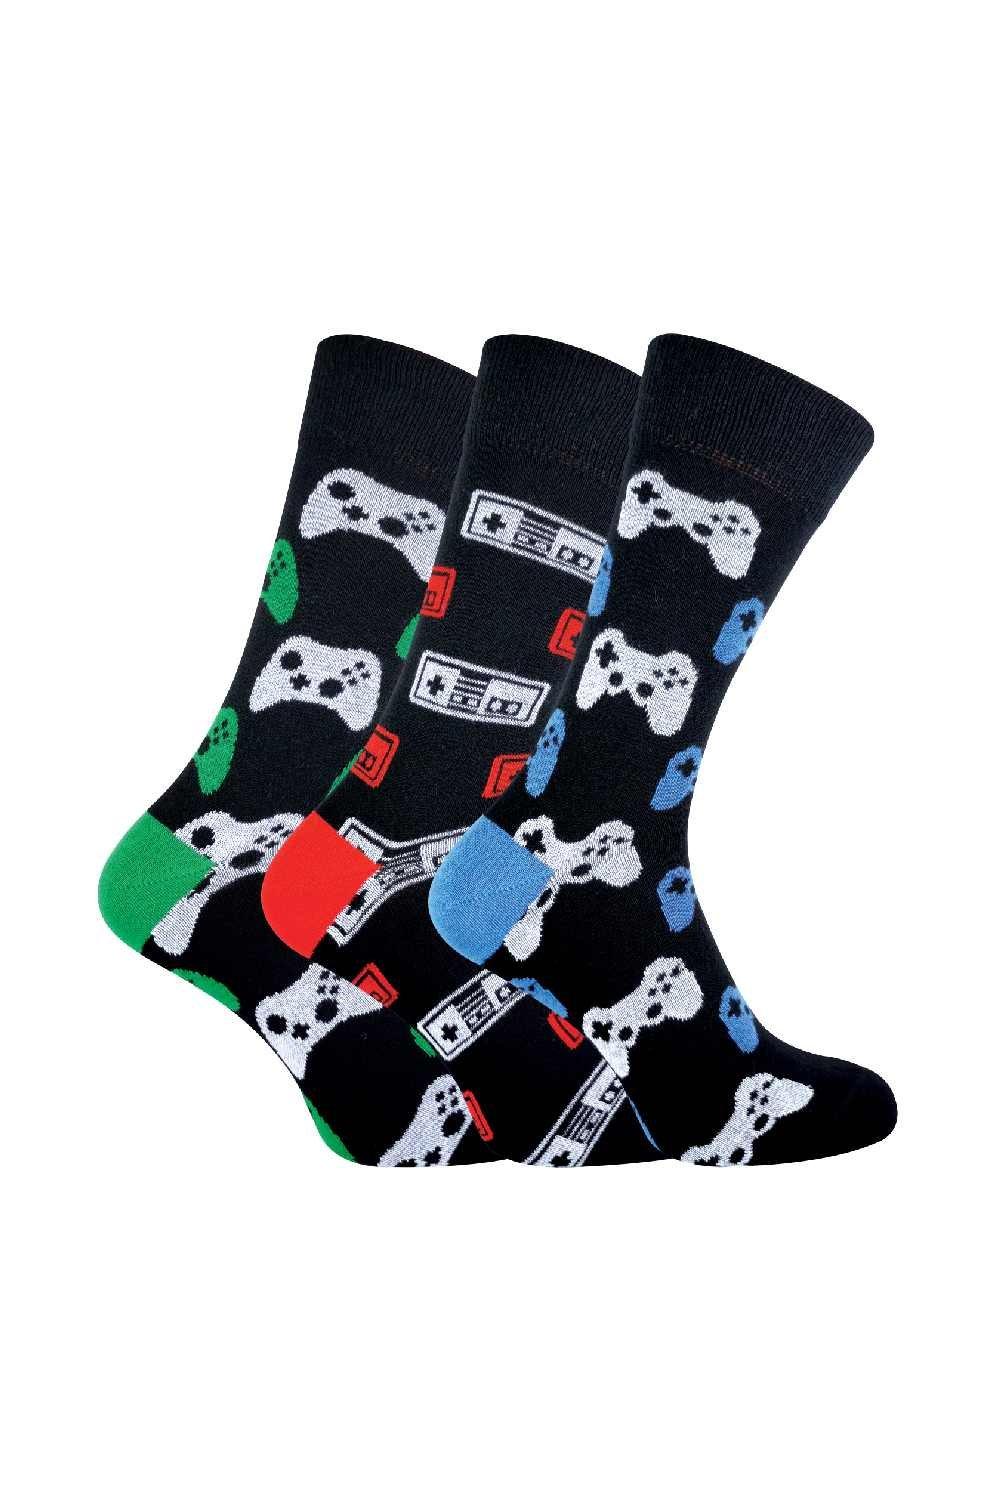 3 Pack Retro Gaming Funky Novelty Video Game Socks